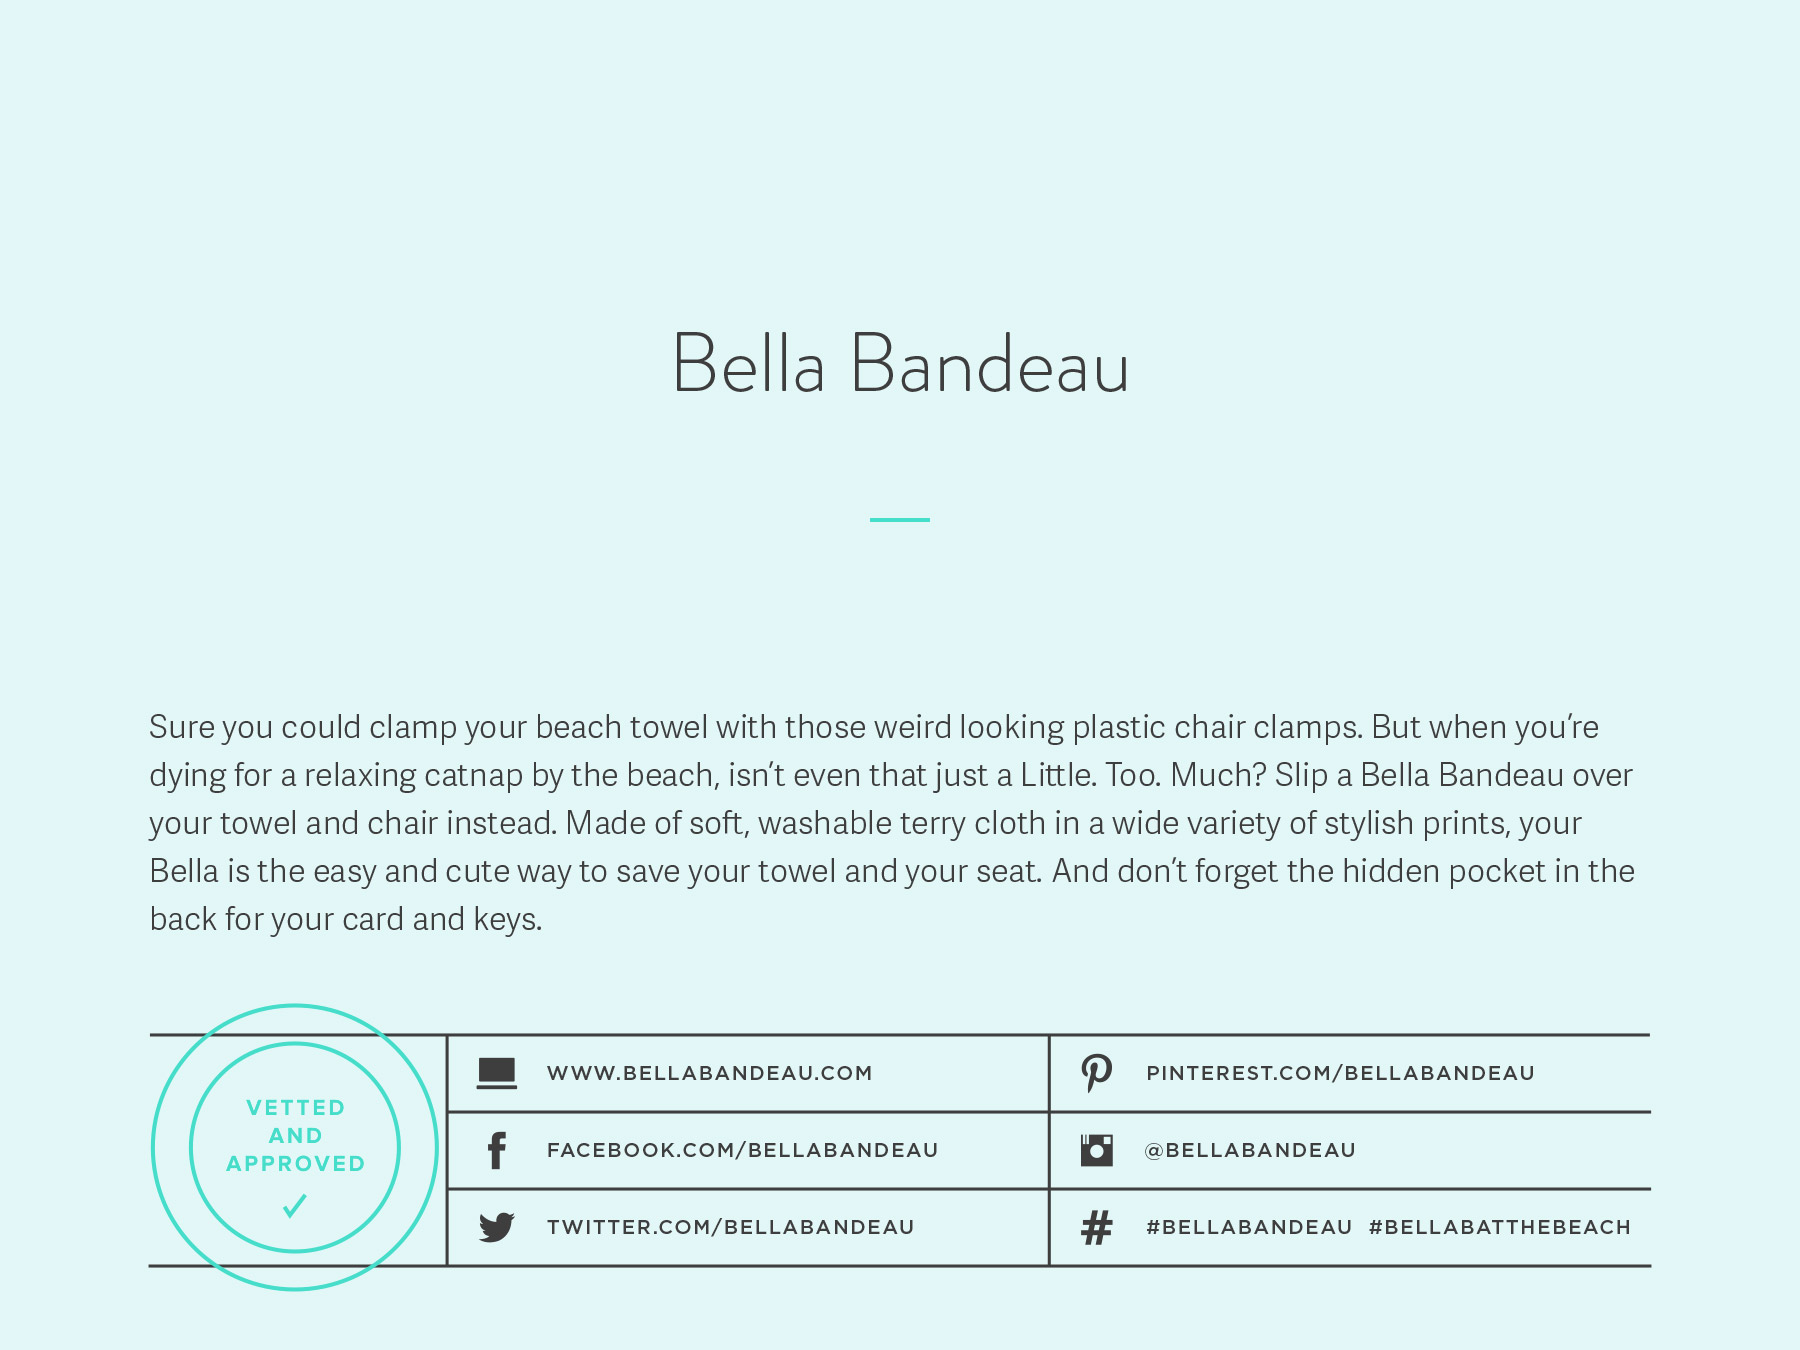 Bella Bandeau company naming process